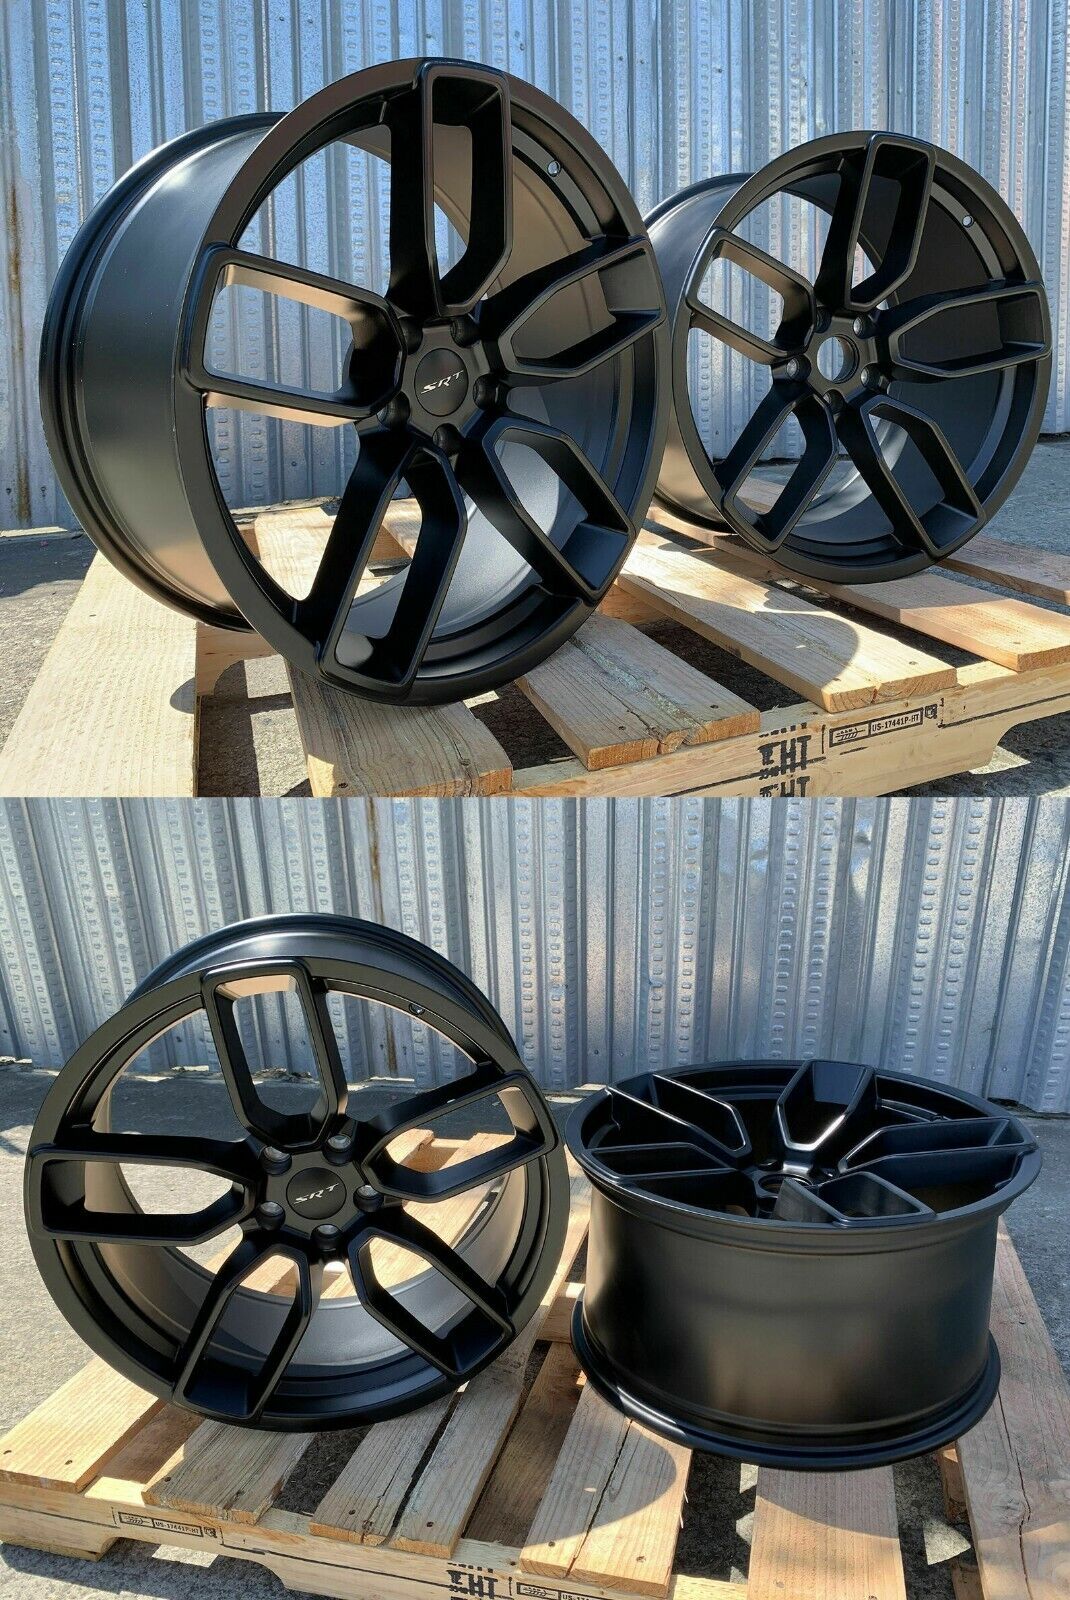 20 Inch Matte Black Wheels 20x9.5 / 20x10.5 Fit Dodge Charger Challenger Set 4